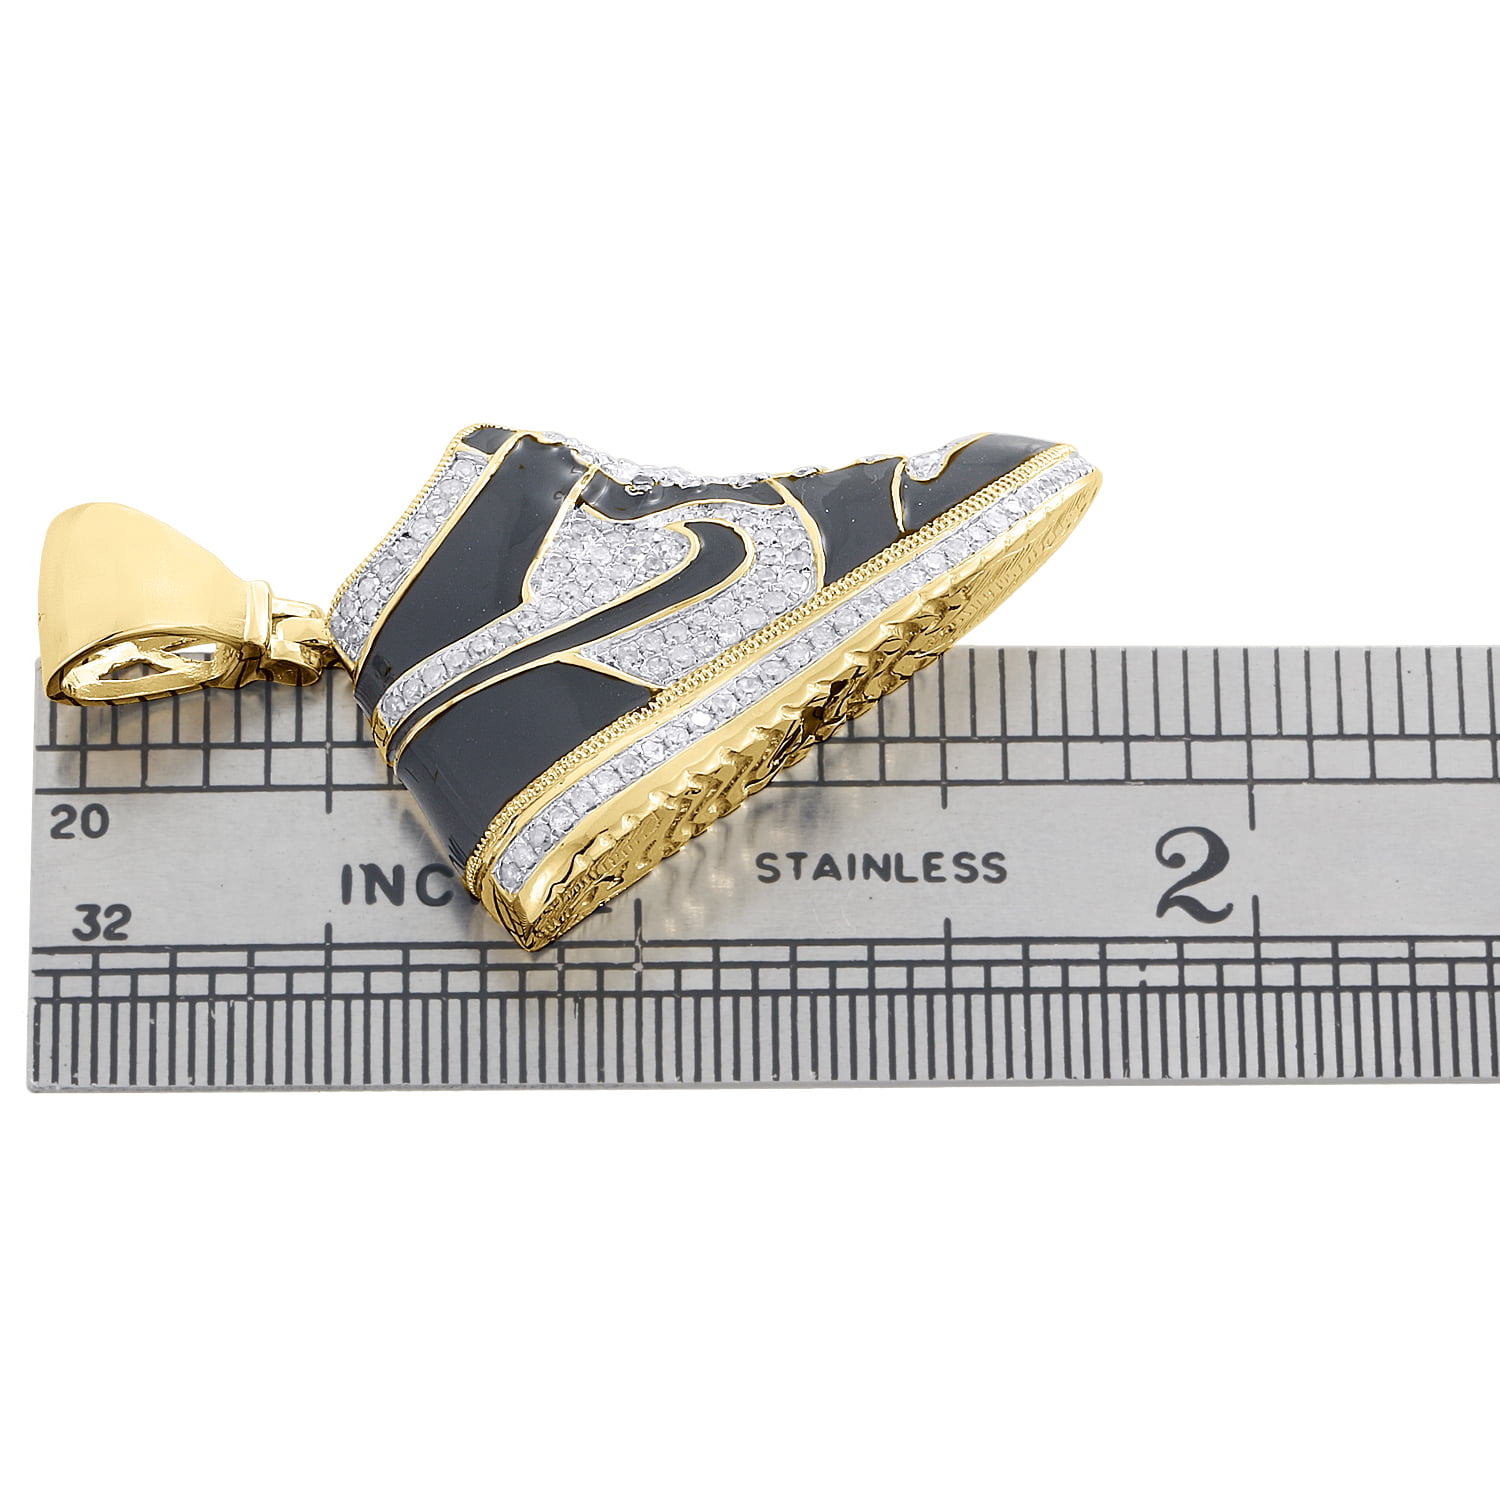 14k/18k Gold Air Jordan IV Style Sneaker Pendant